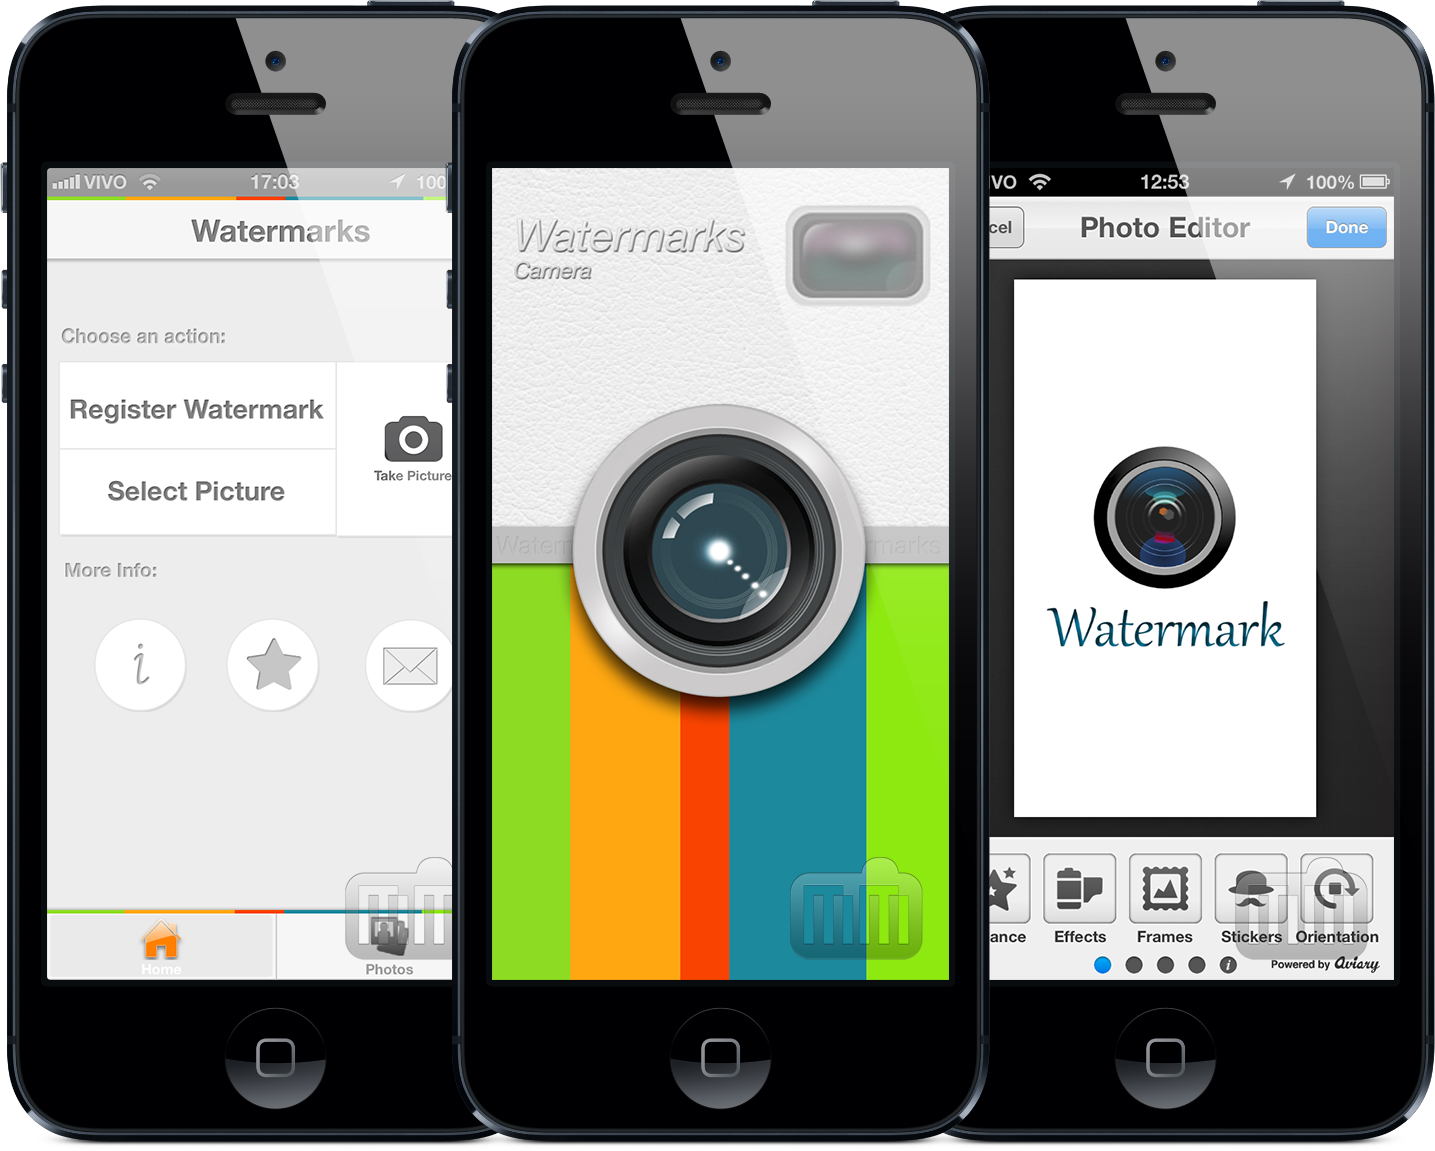 Watermarks - iPhones